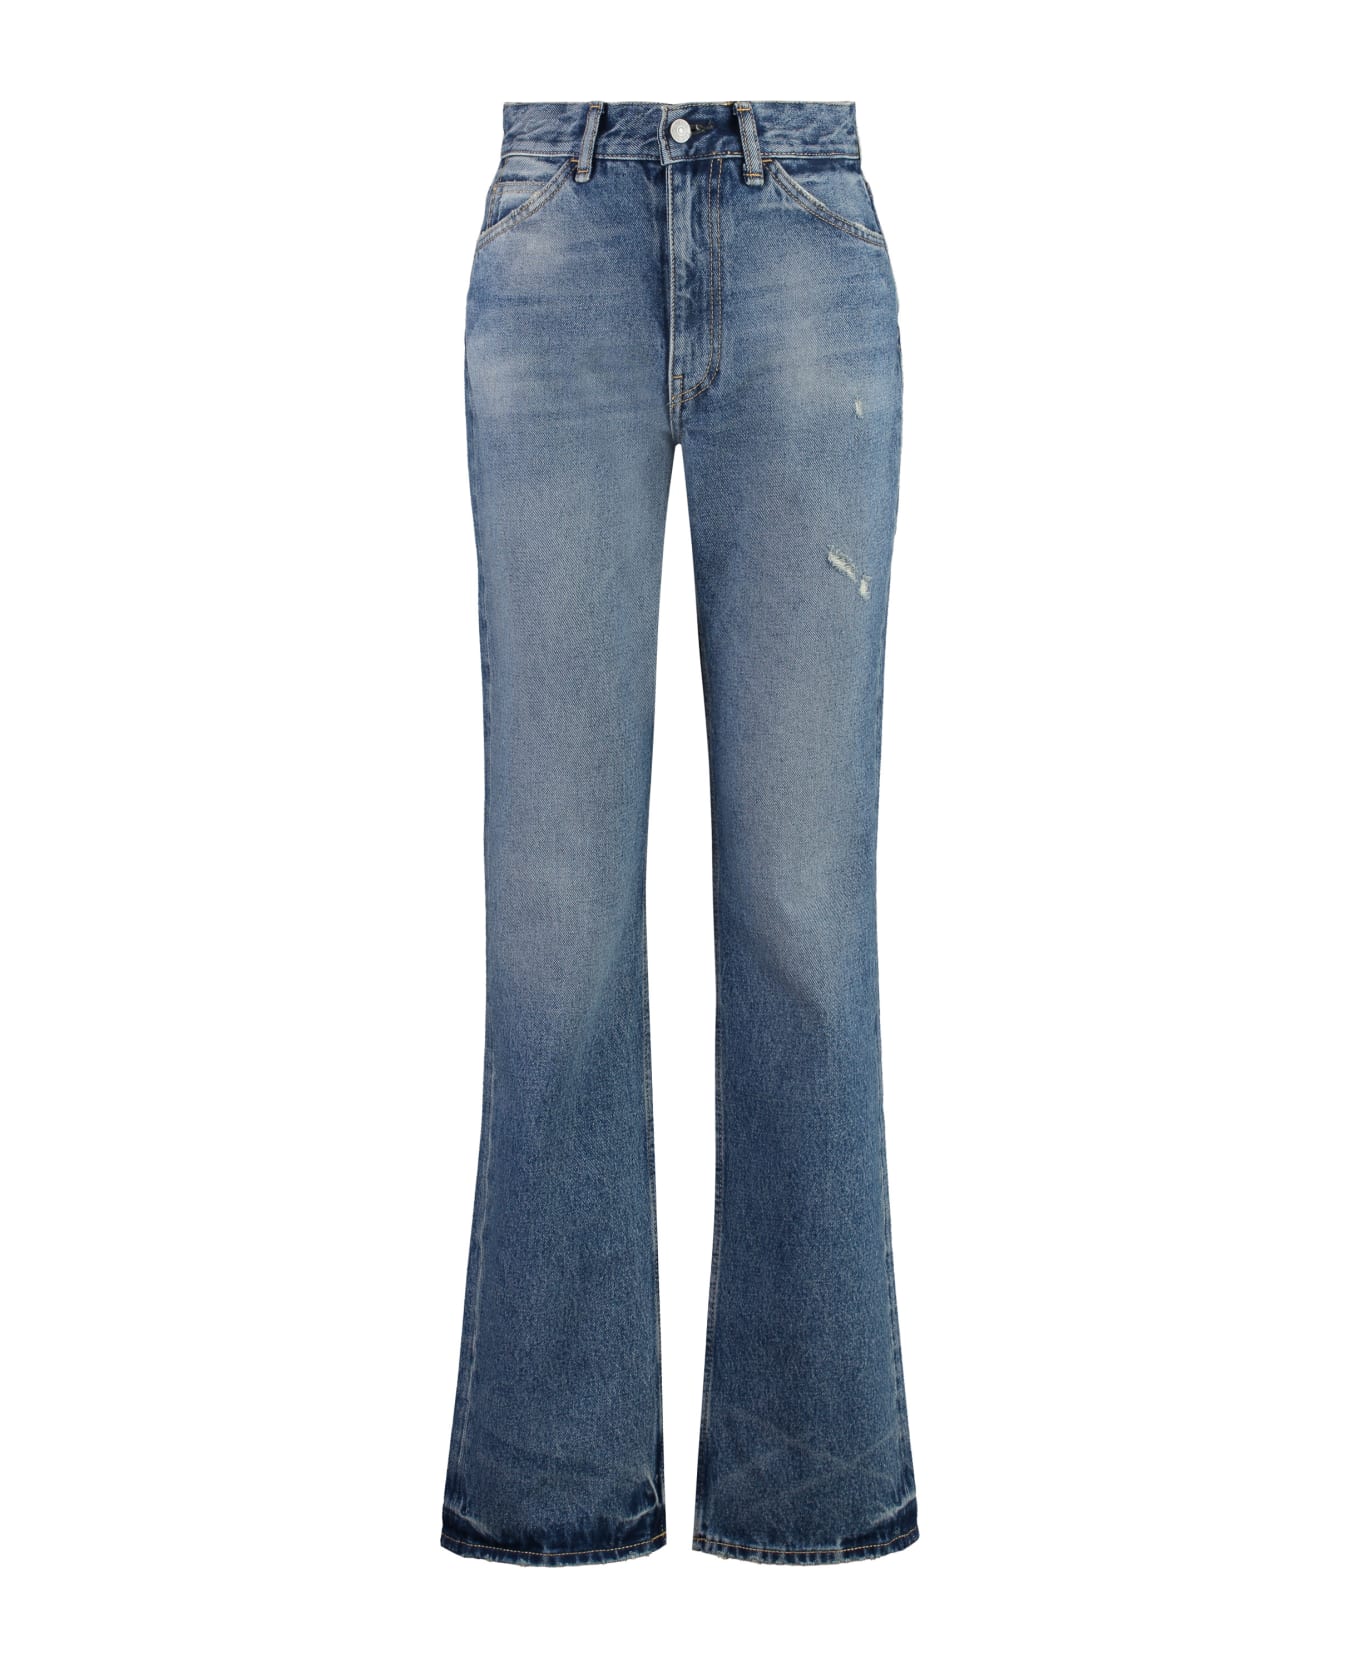 Acne Studios 1977 Regular Fit Jeans - Denim